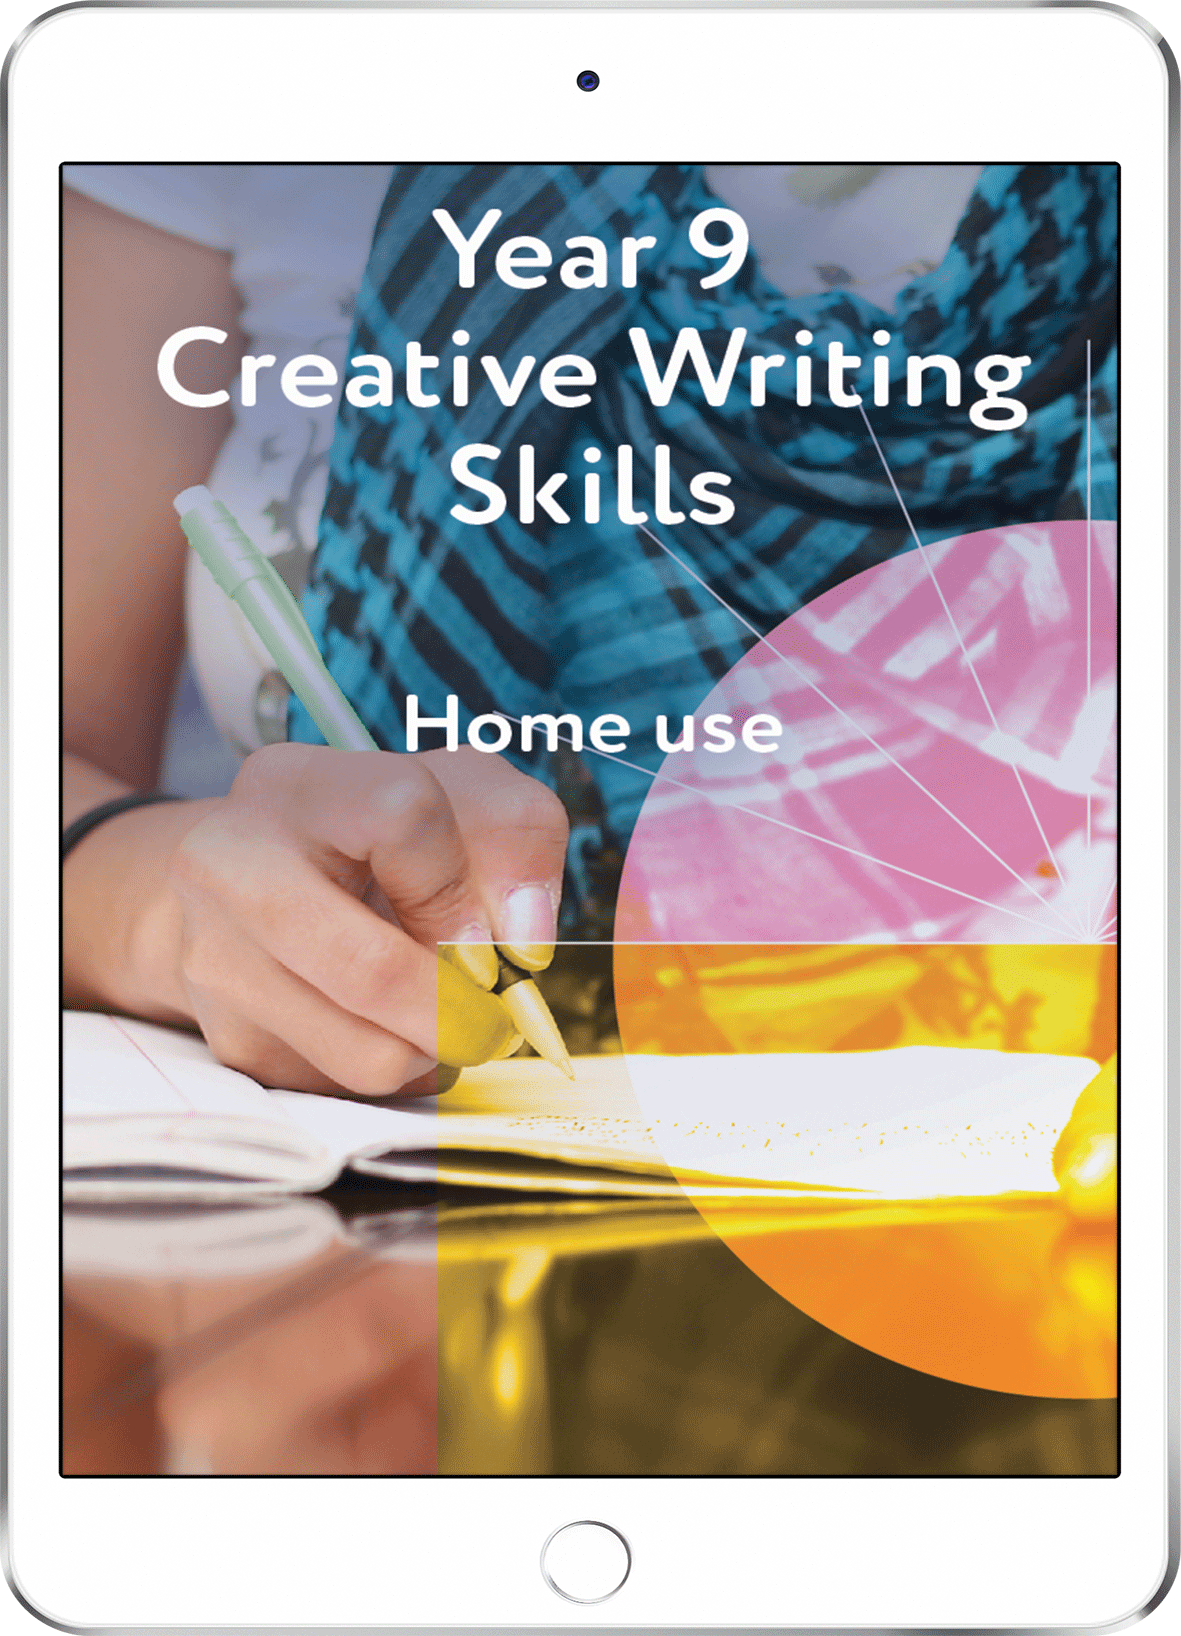 Year 9 Creative Writing Skills - Home Use